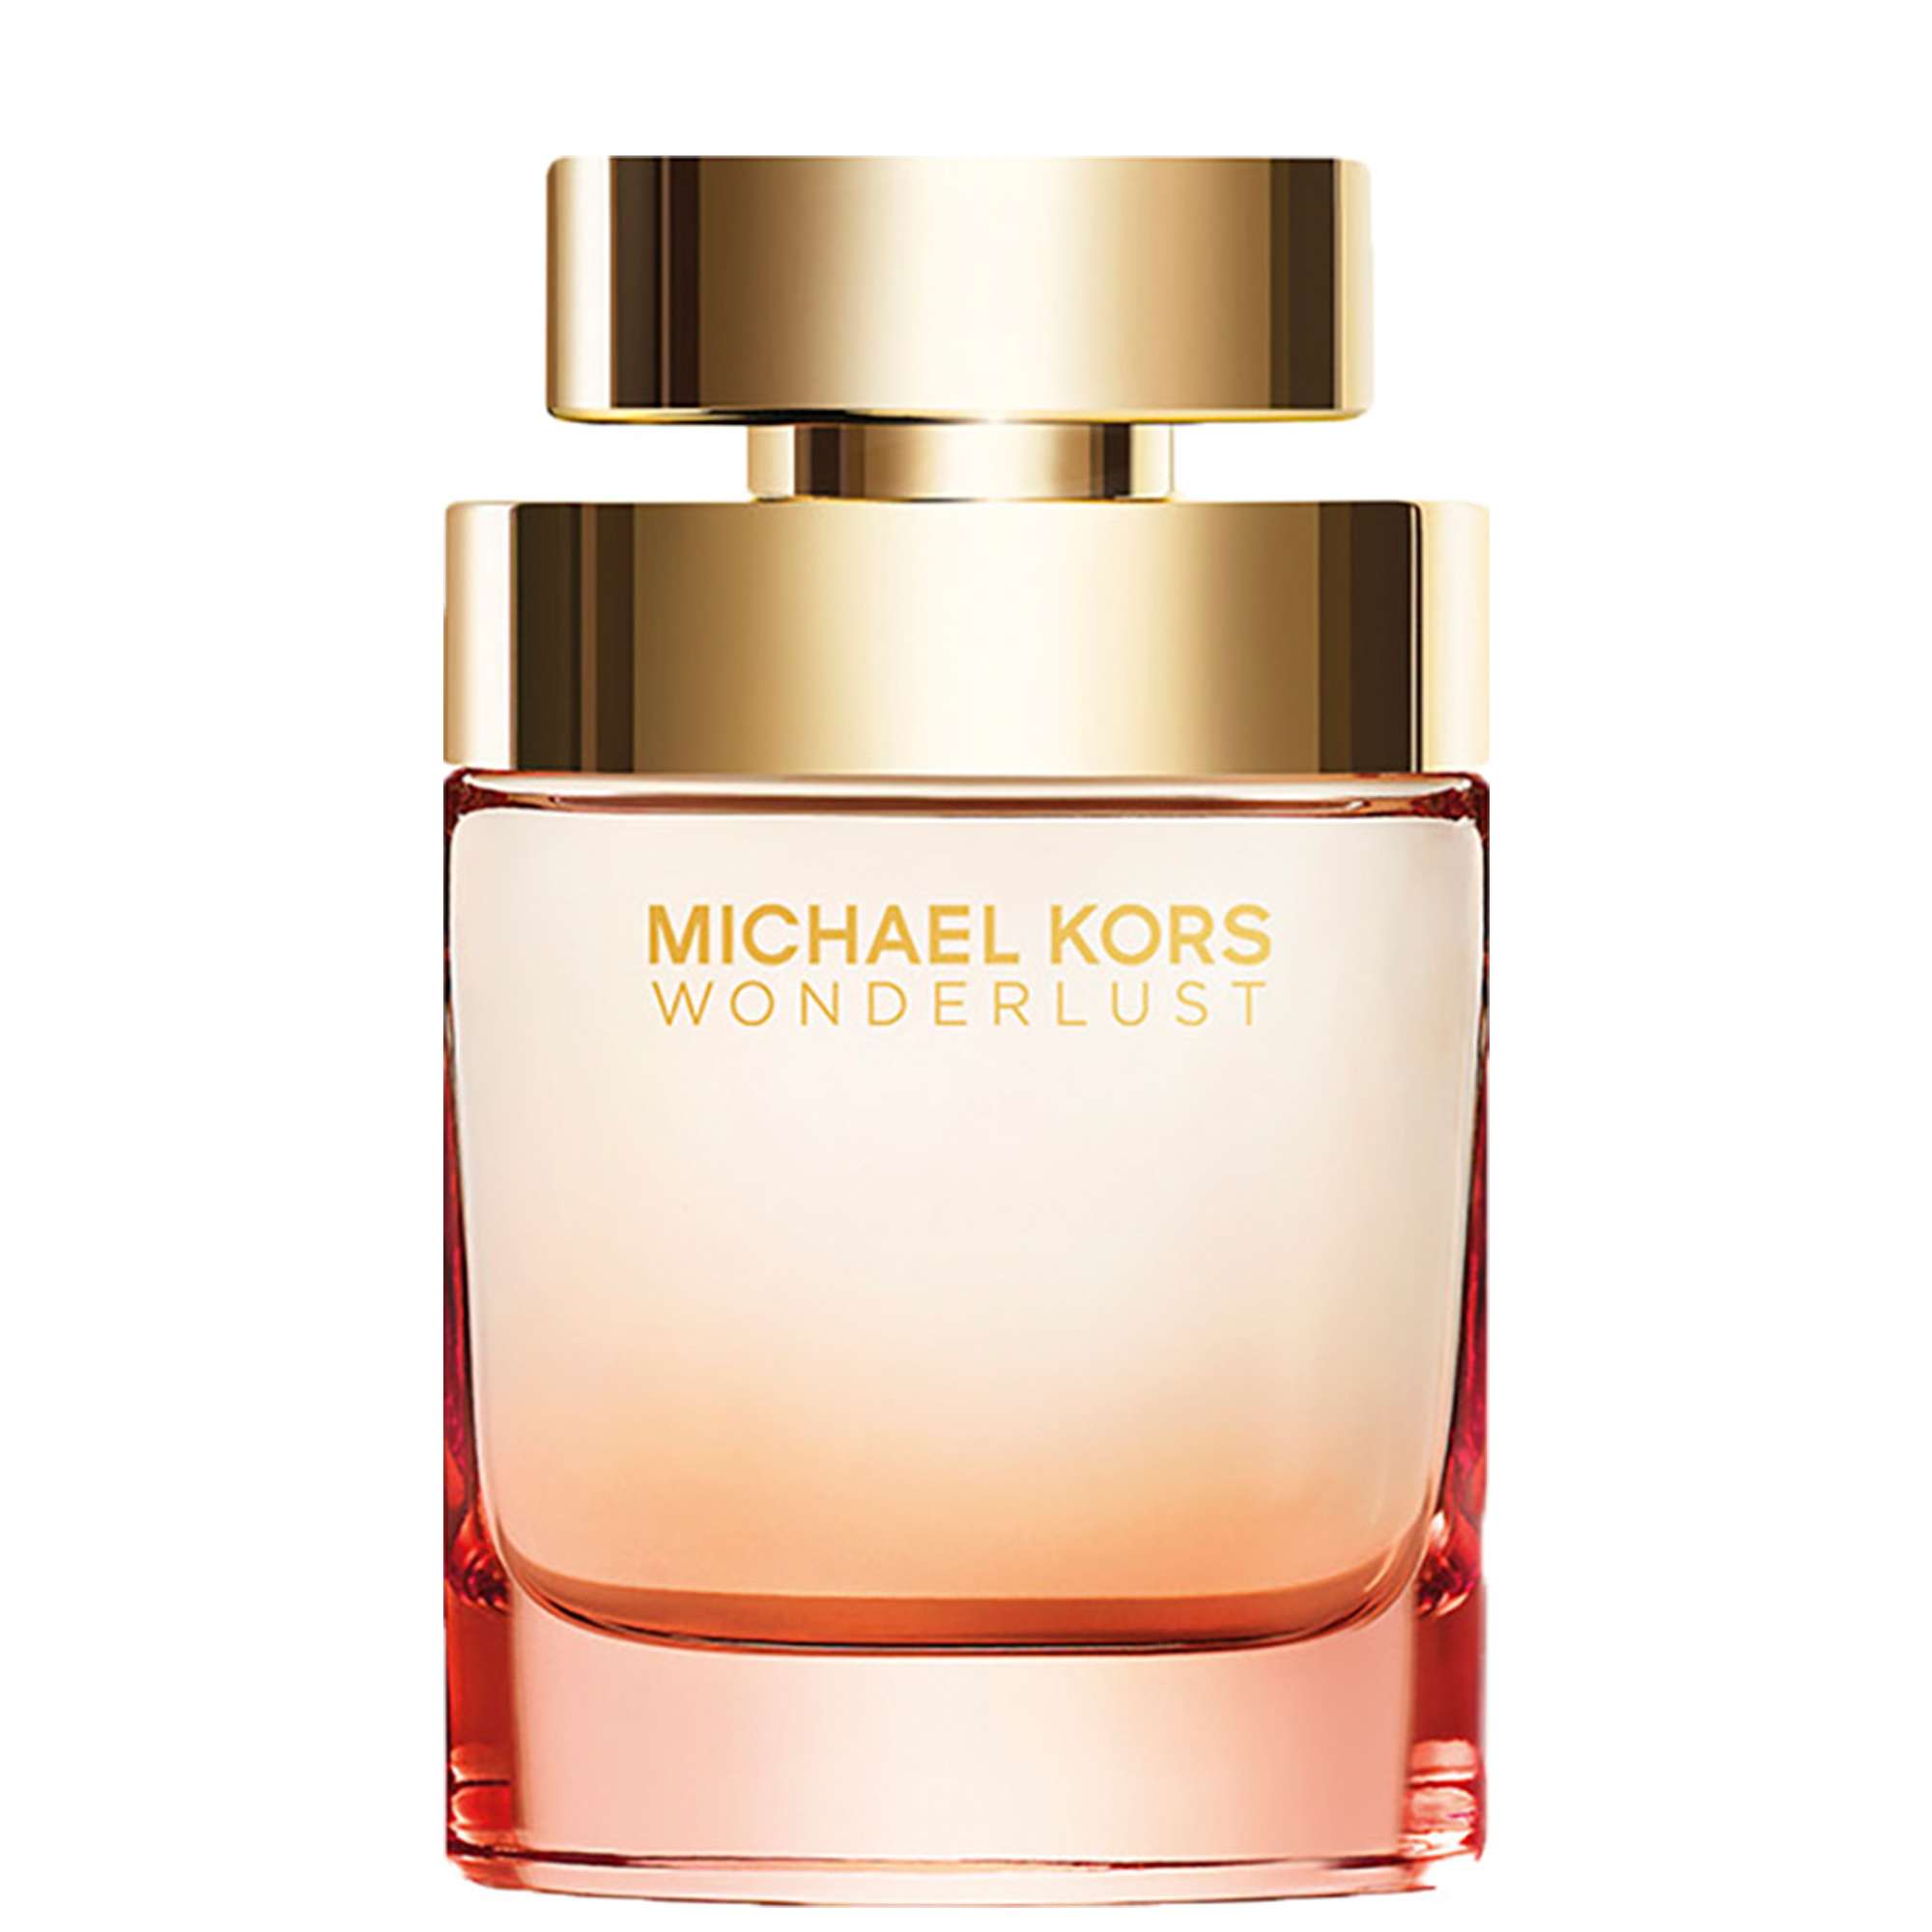 Photos - Women's Fragrance Michael Kors Wonderlust Eau de Parfum Spray 100ml 